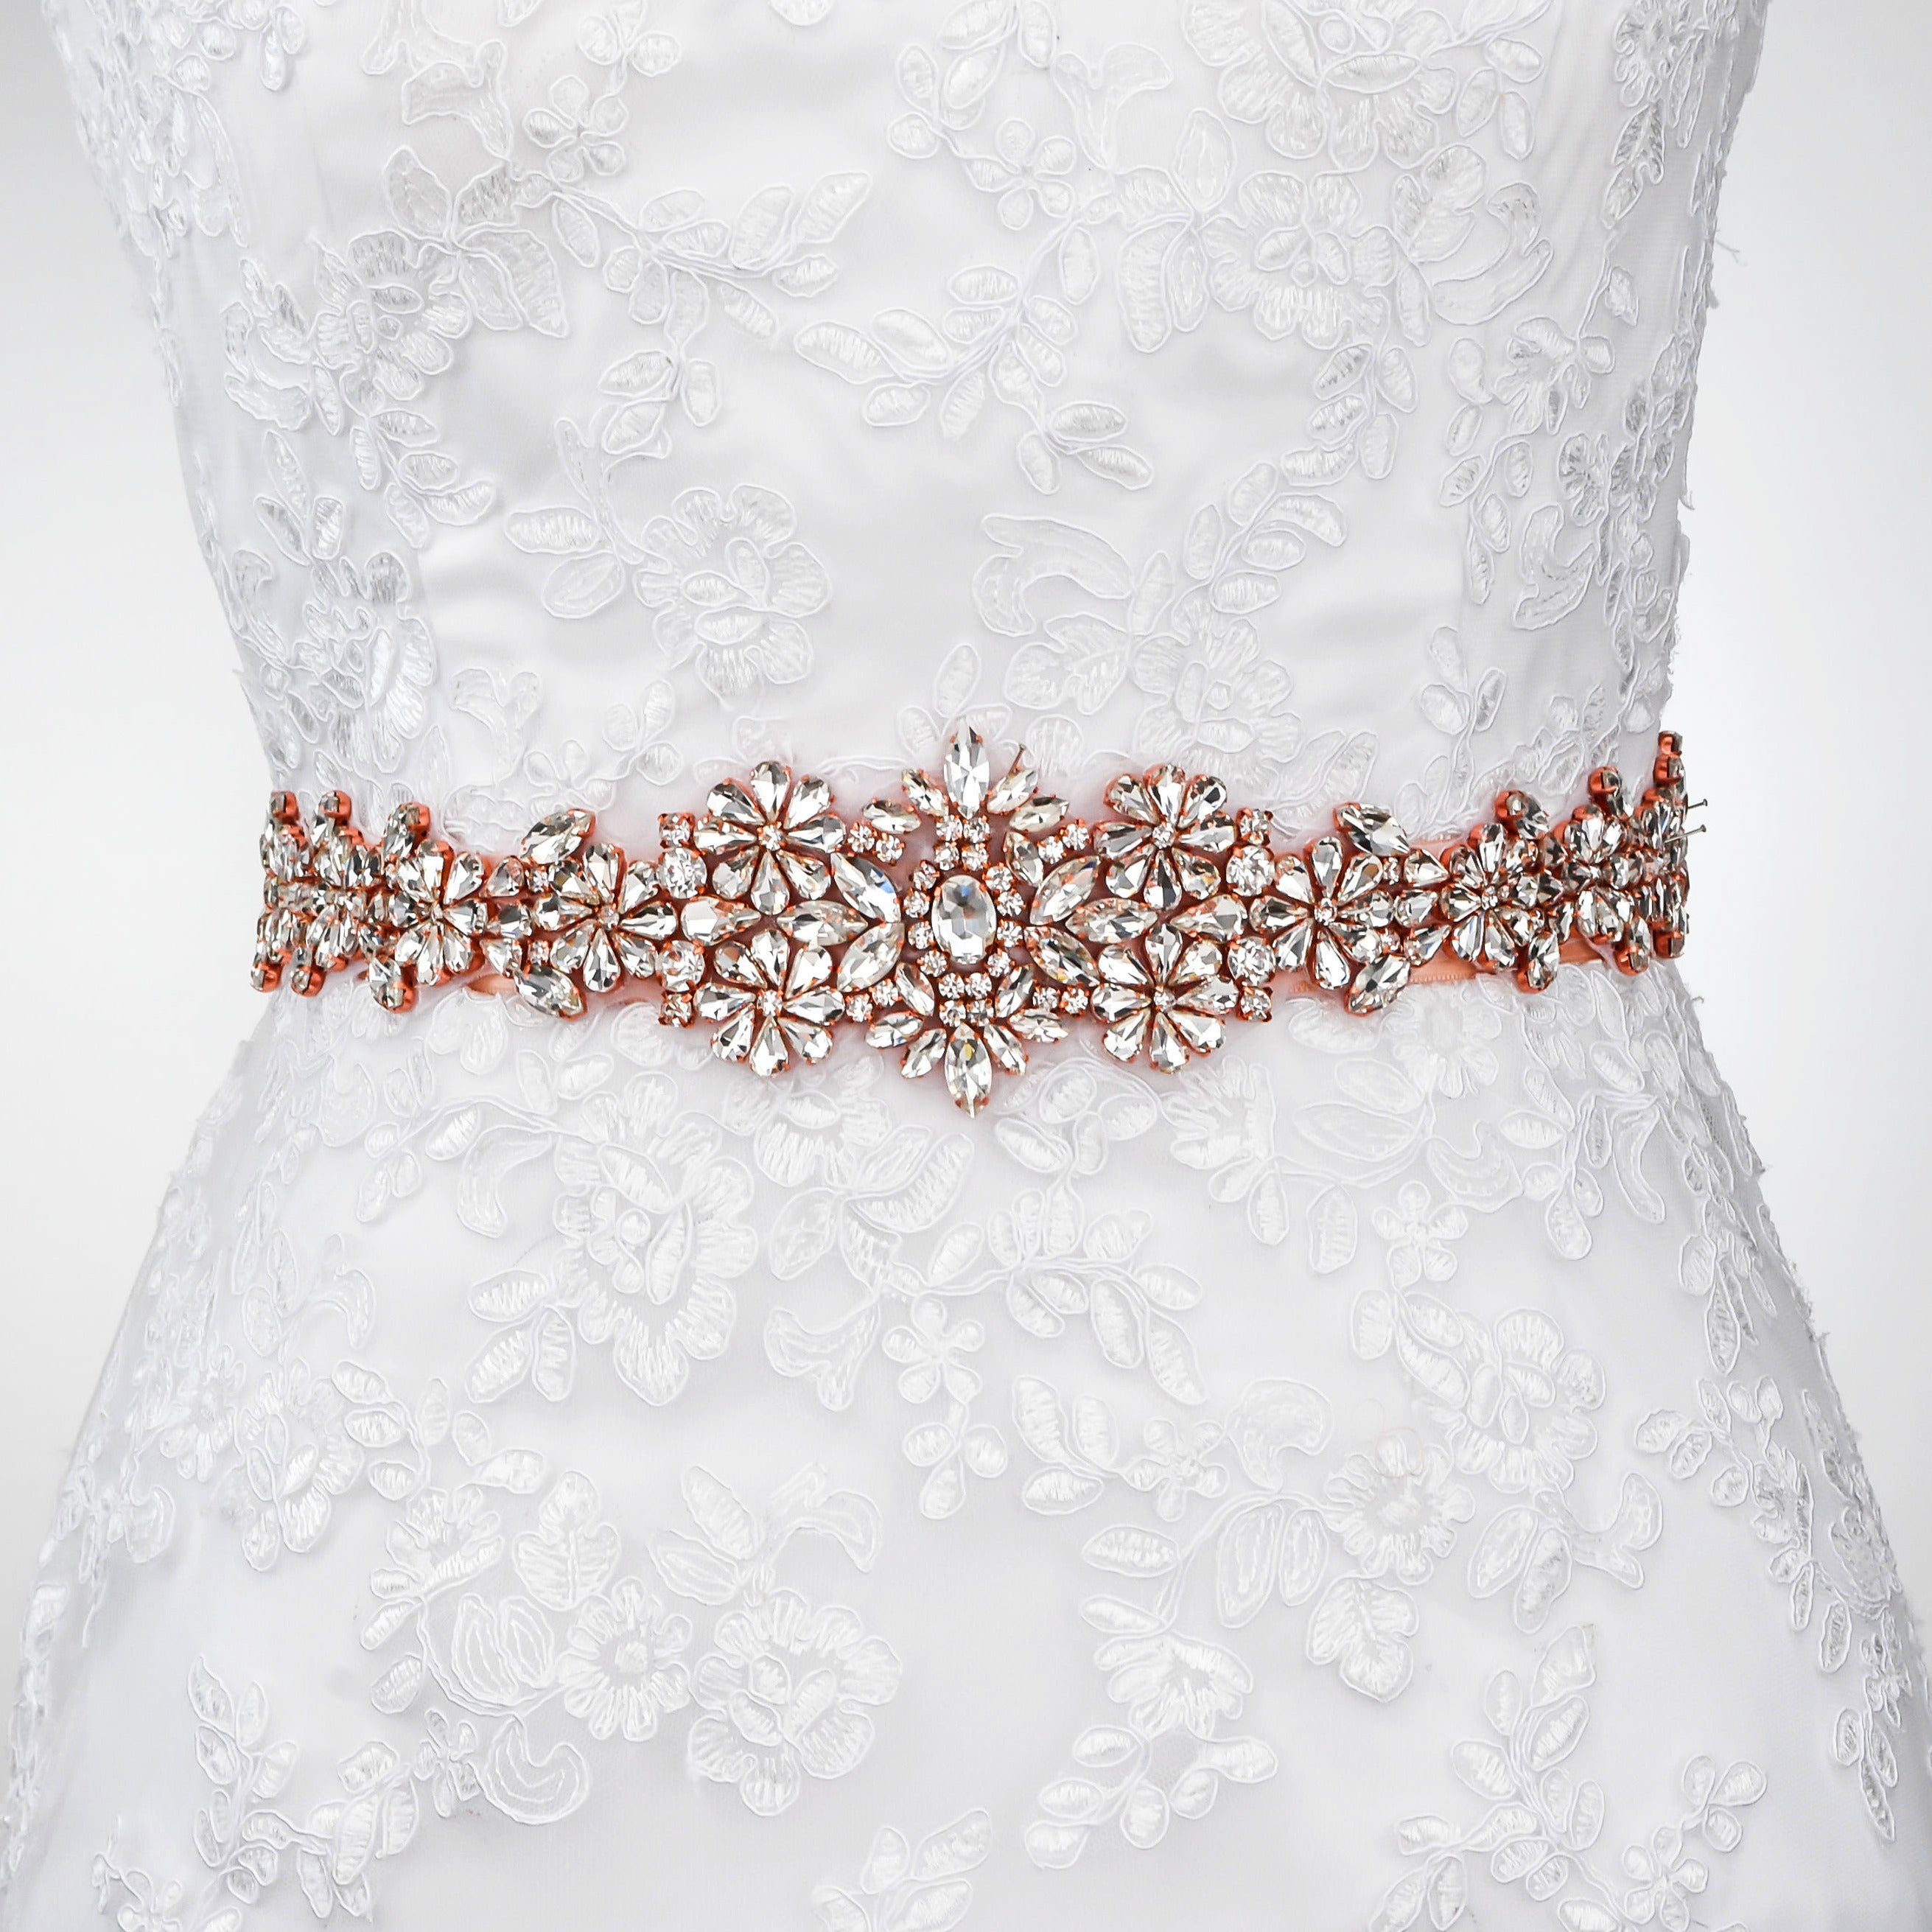 rose gold wedding dress belt